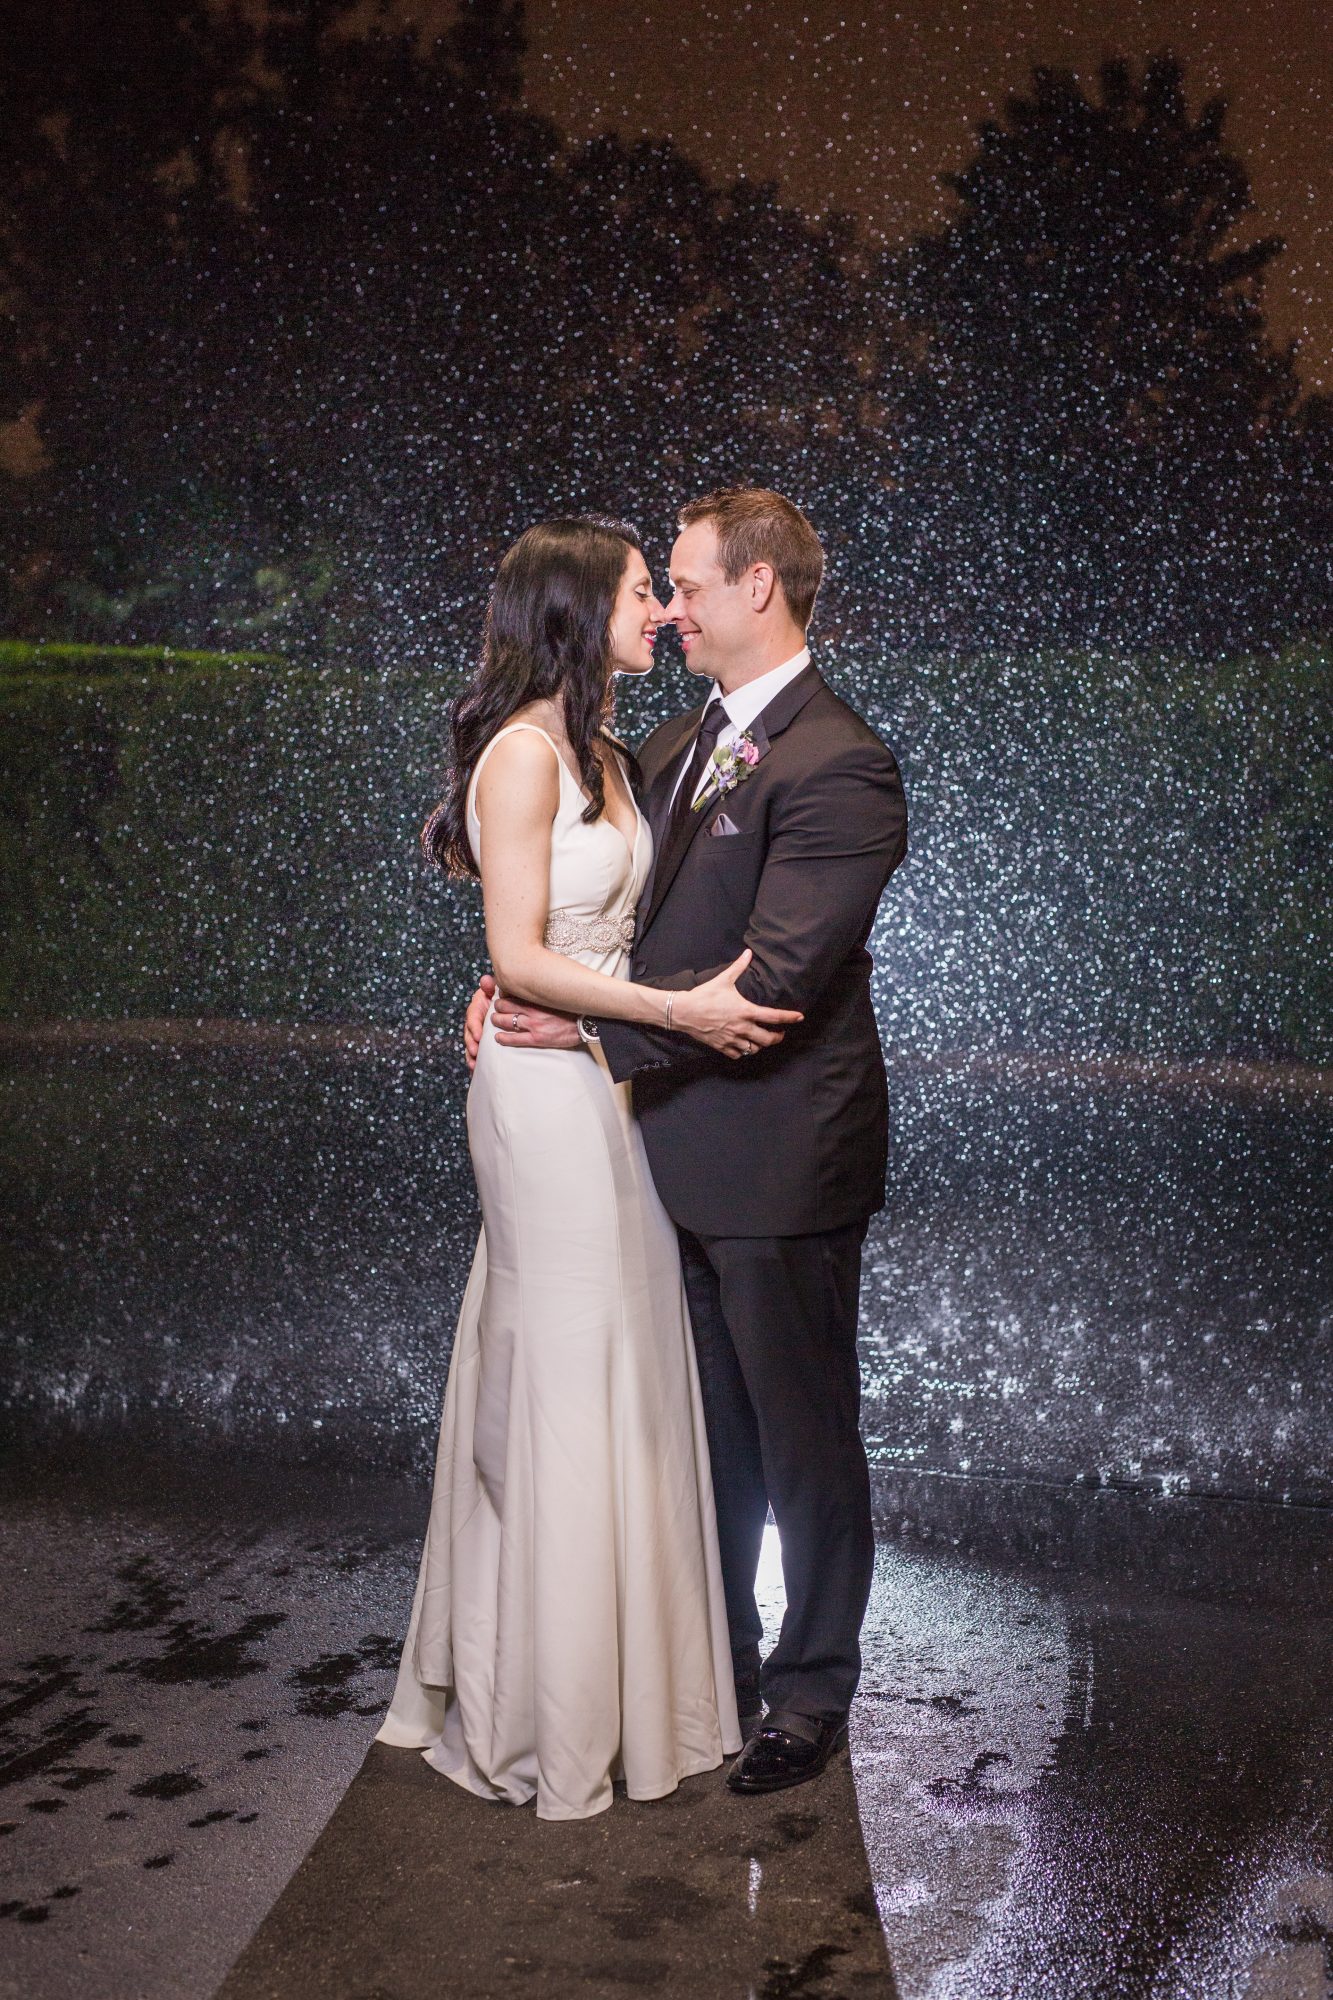 Royal Park Hotel wedding portraits in the rain at night